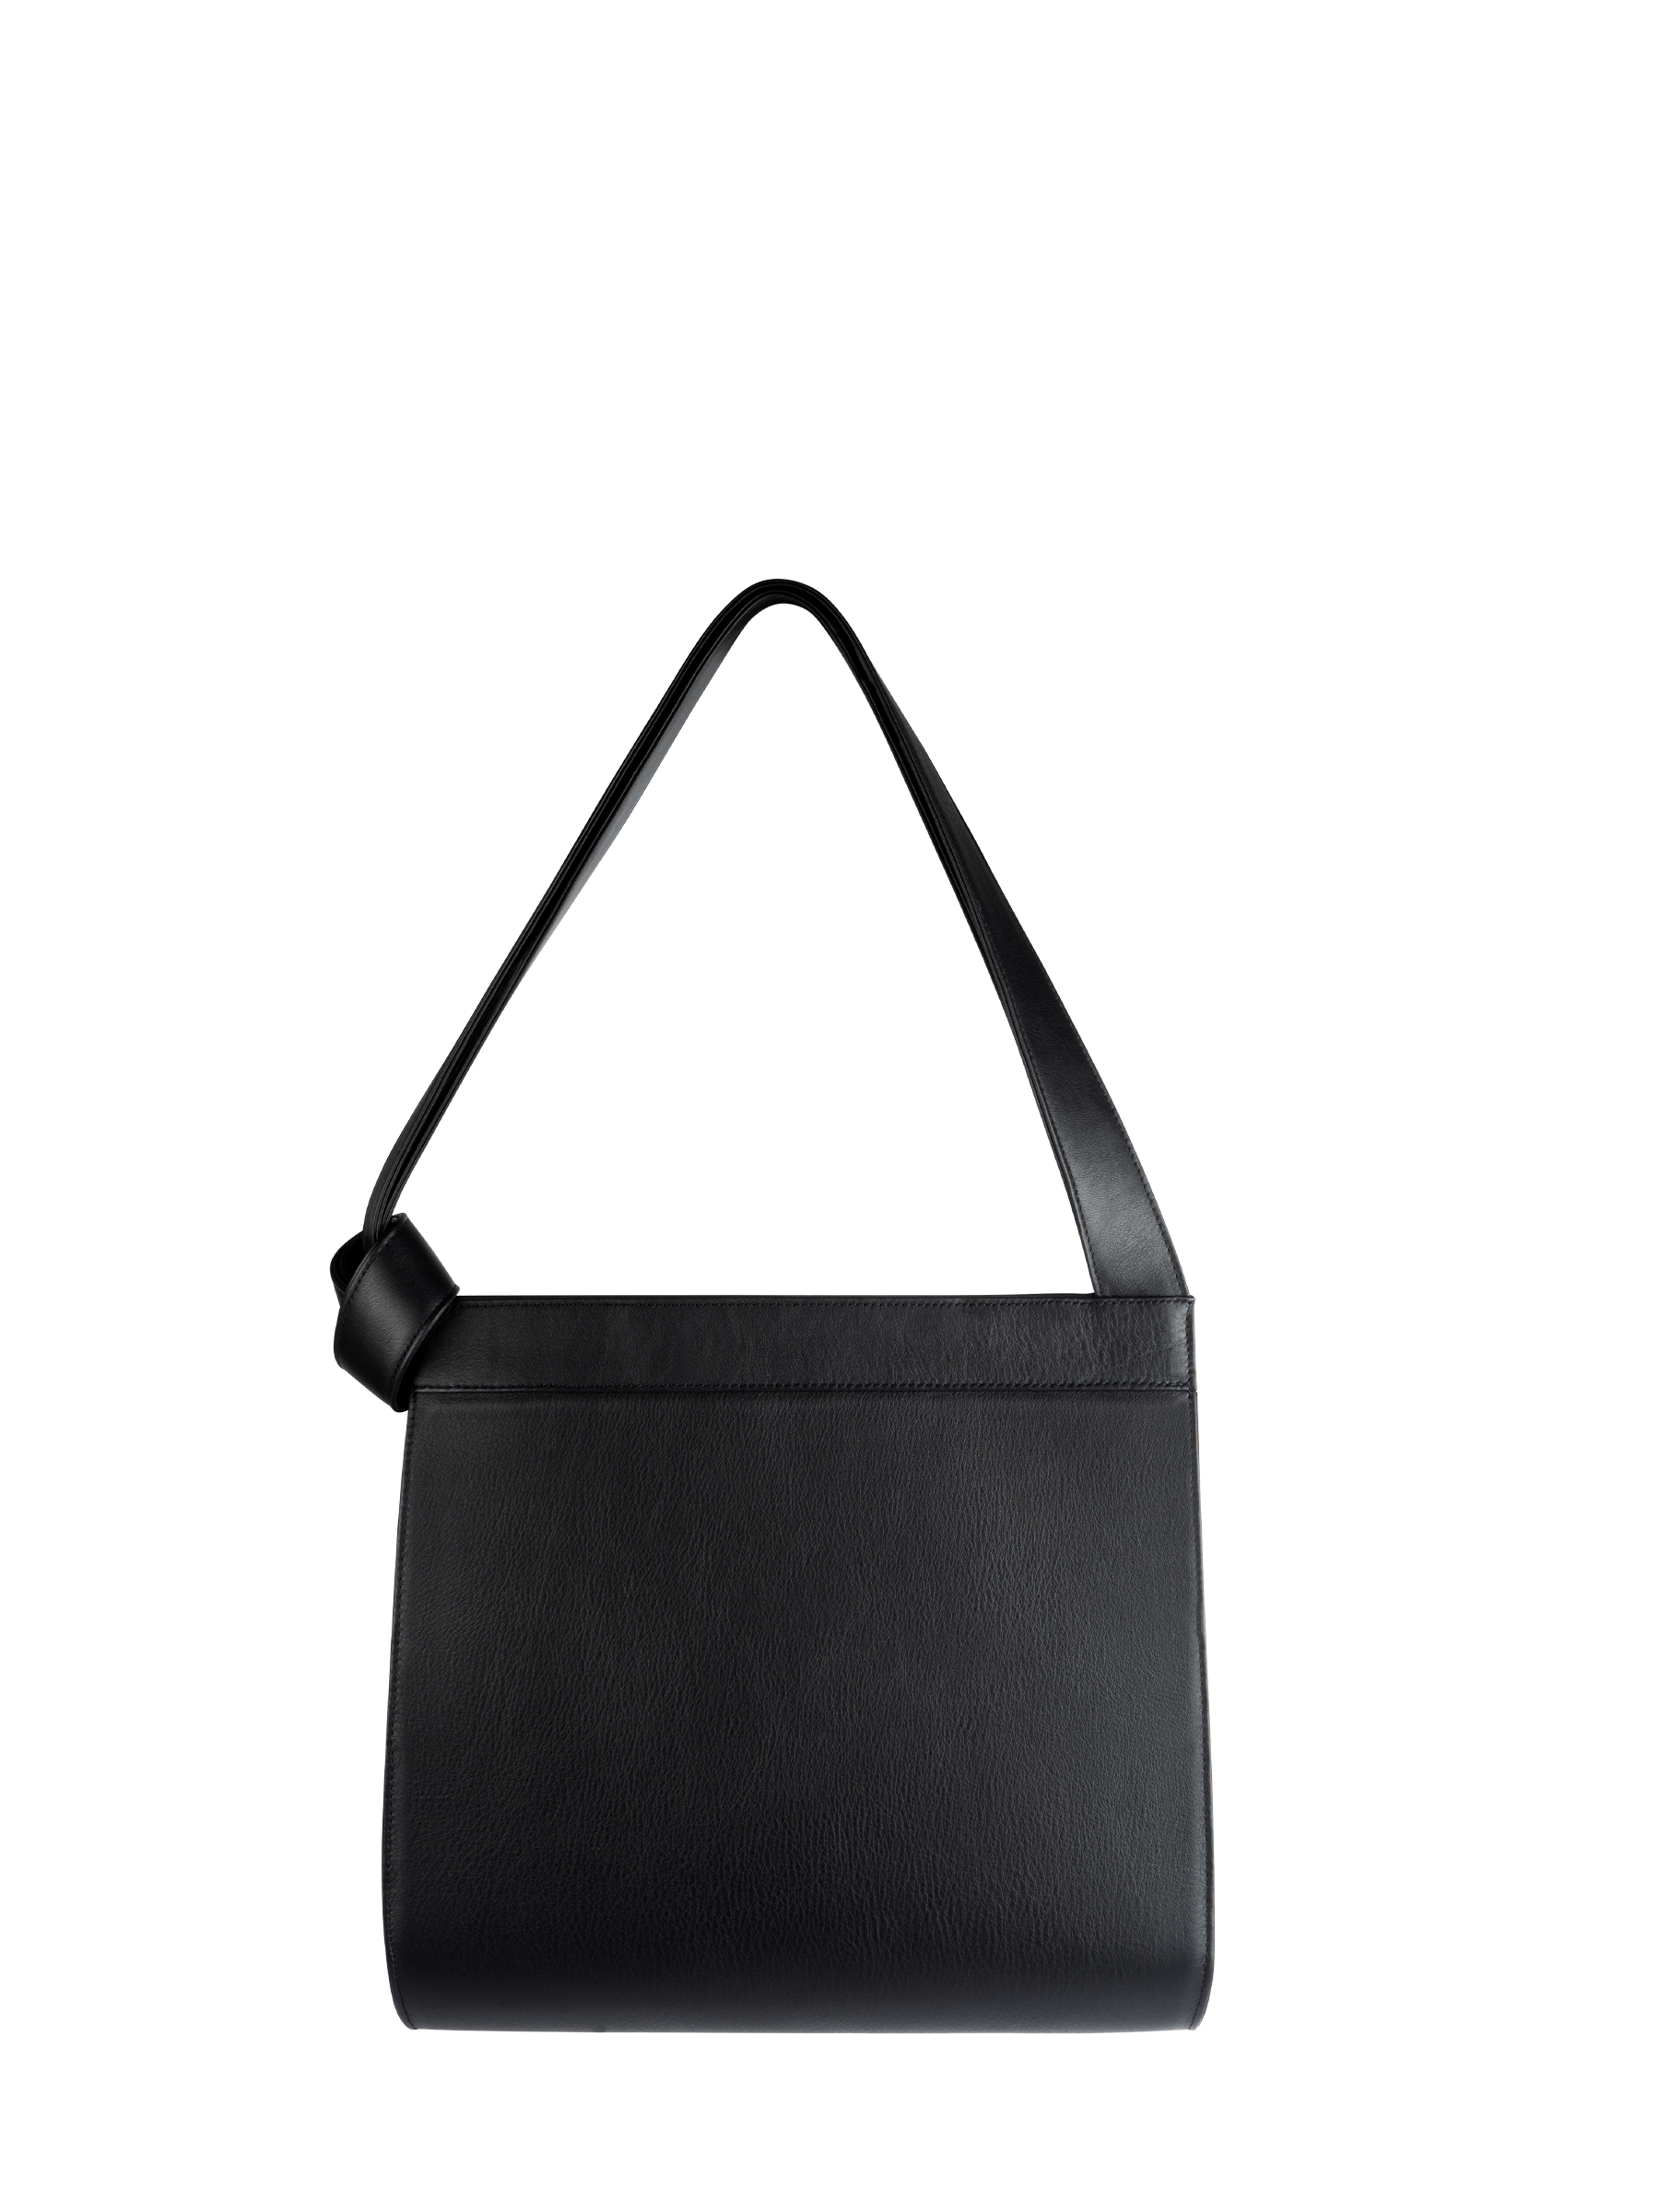 TAPE shoulder bag in black calfskin leather | TSATSAS